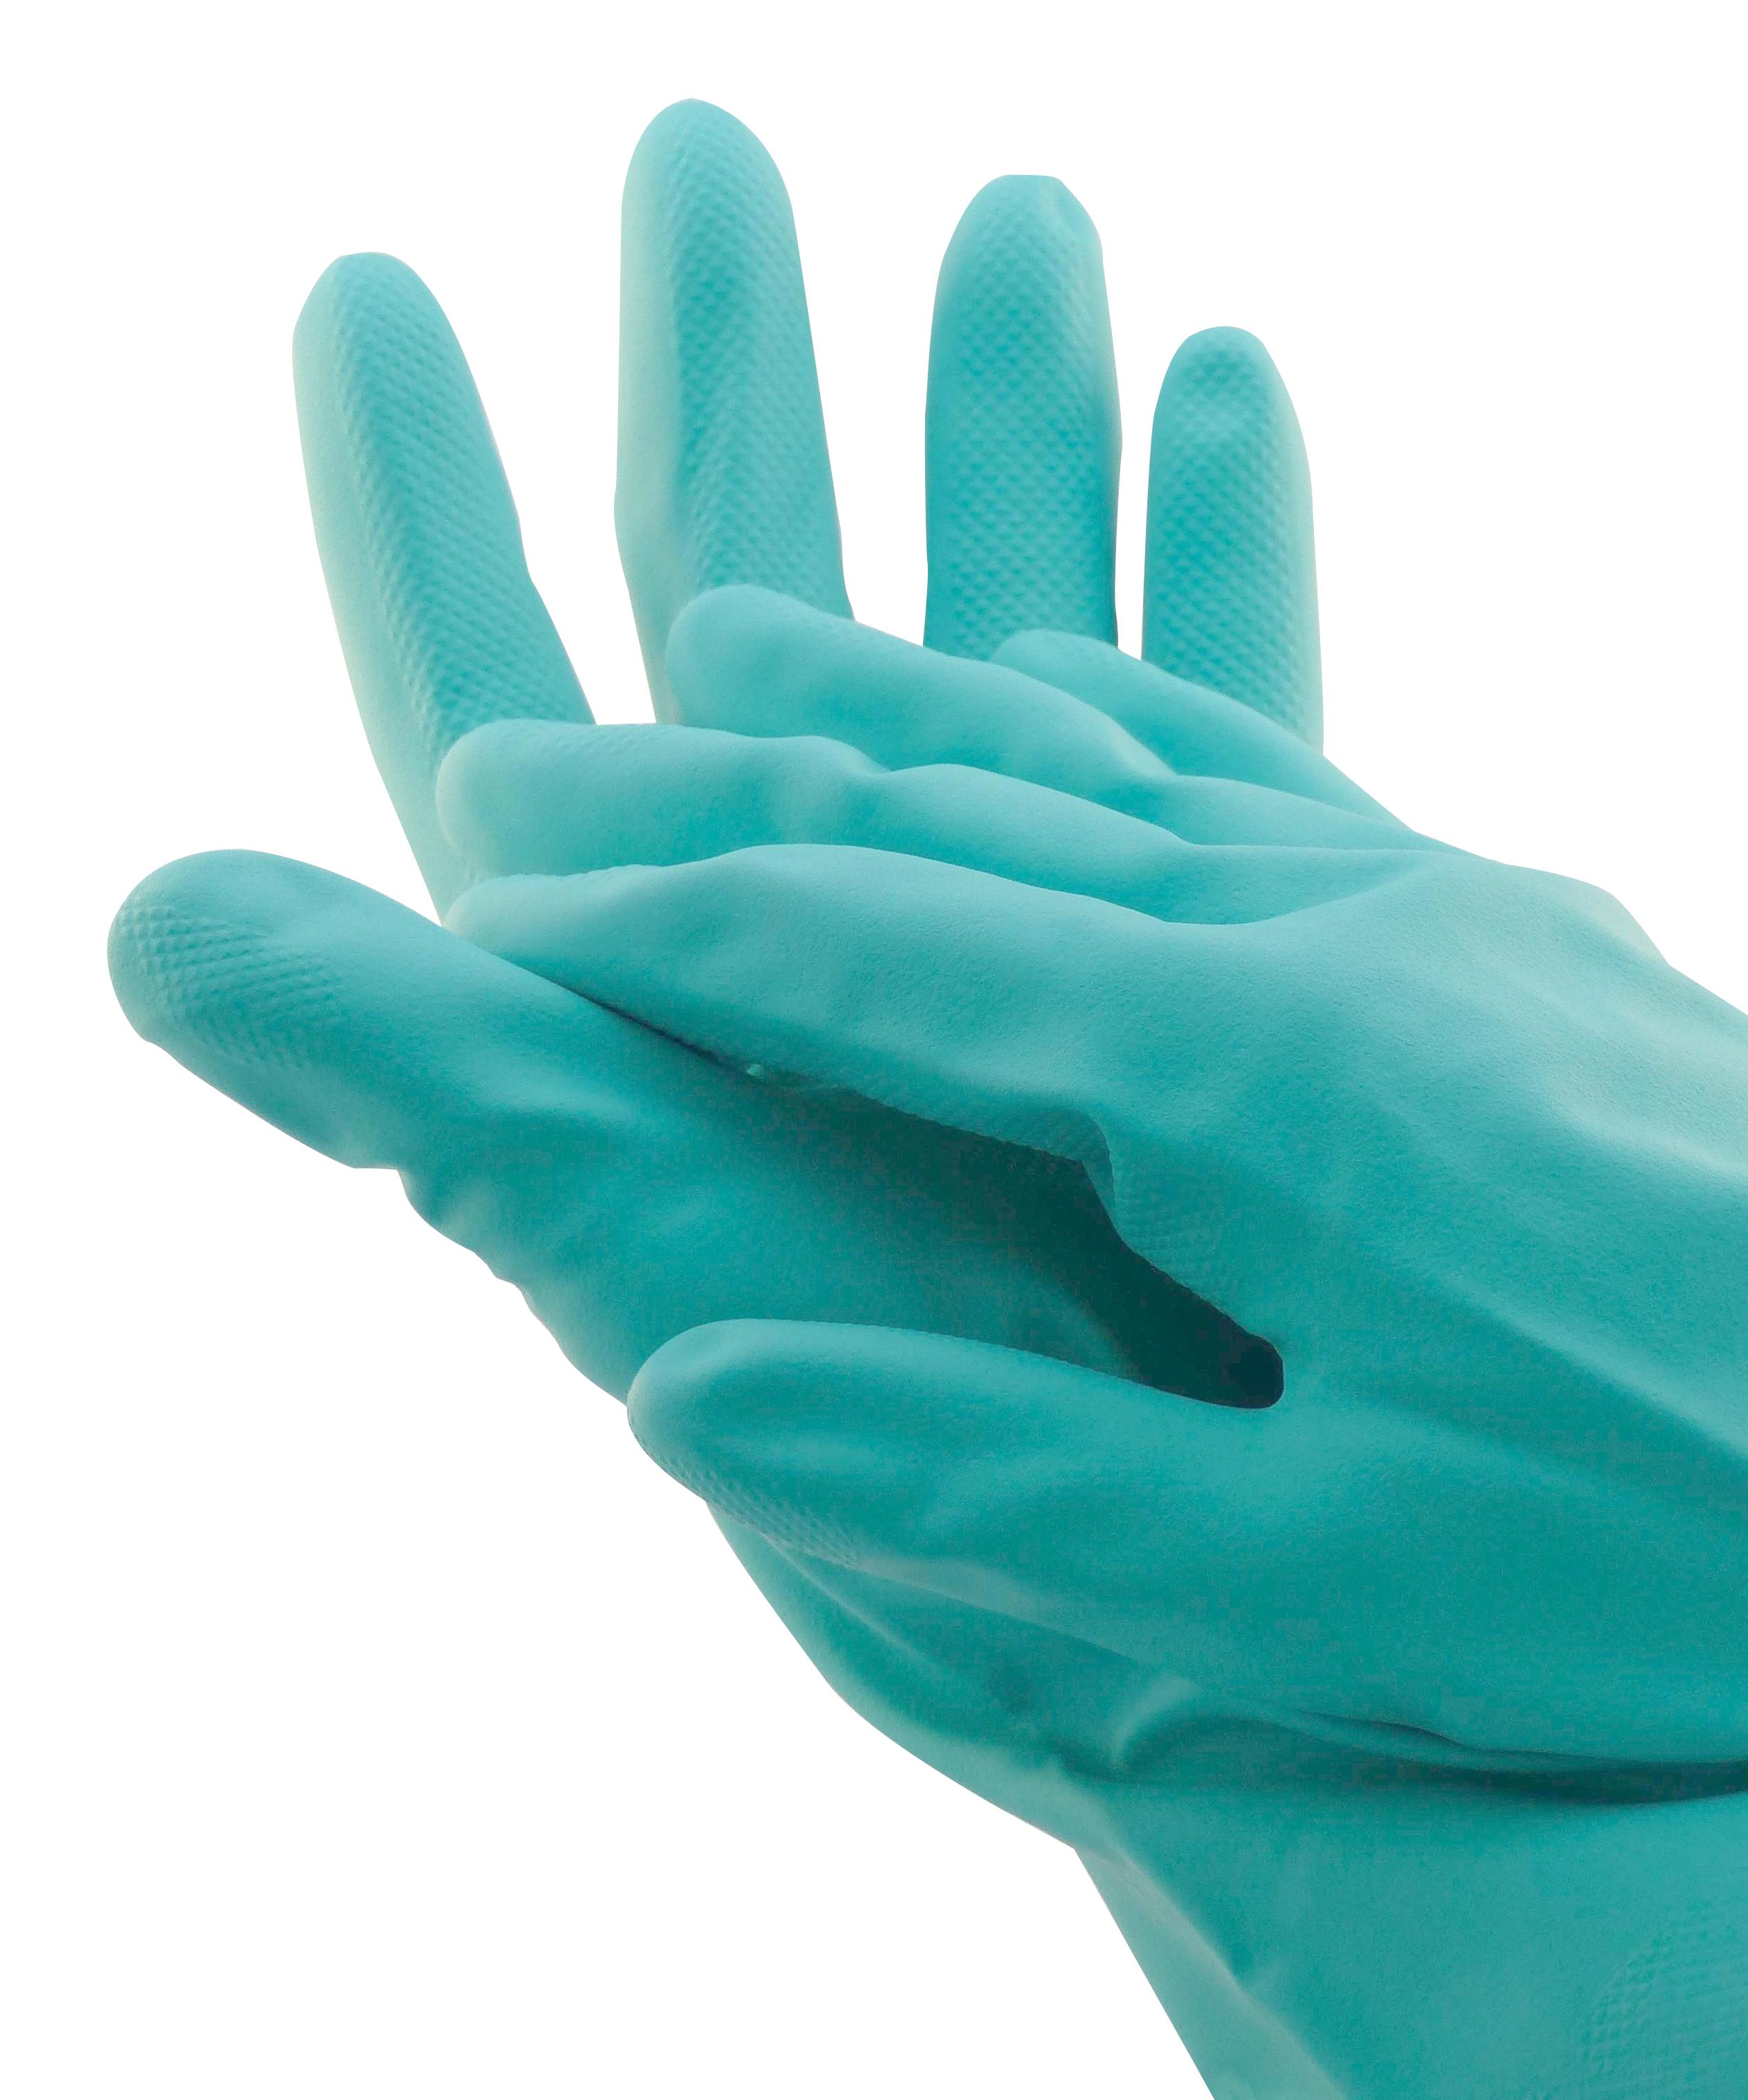 Grüne Mehrweg Nitril Handschuhe Größe L 2 Stück (1 Paar) | Lack schützen Hände